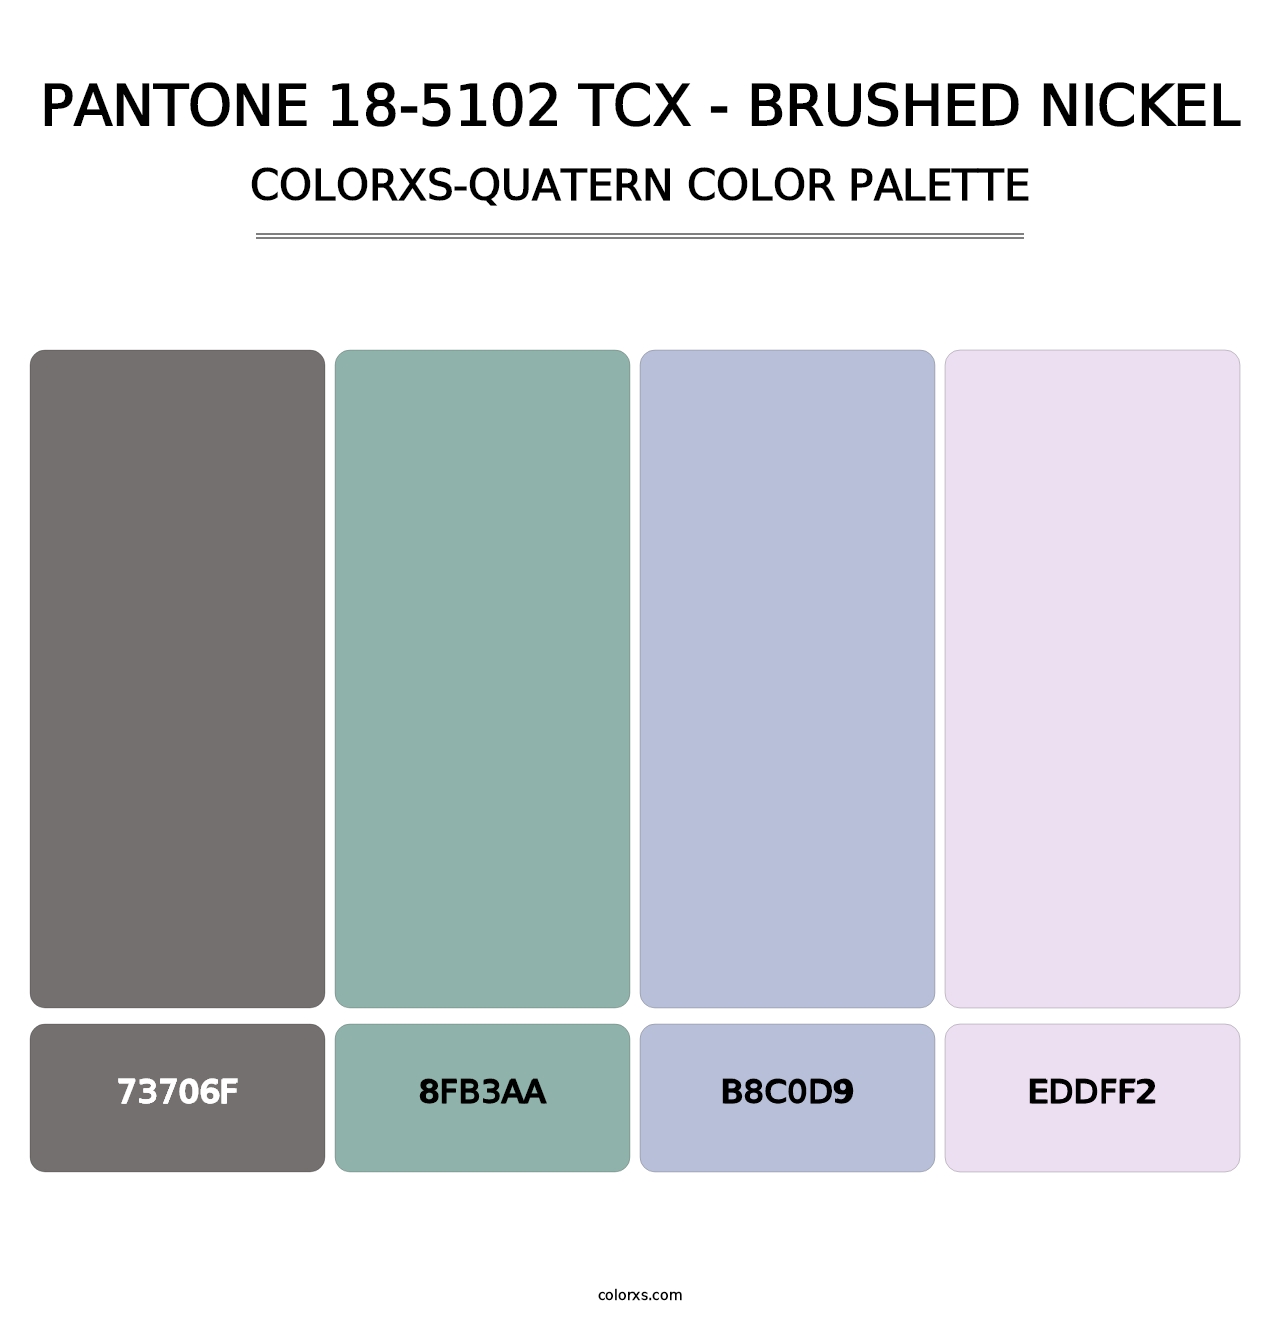 PANTONE 18-5102 TCX - Brushed Nickel - Colorxs Quatern Palette